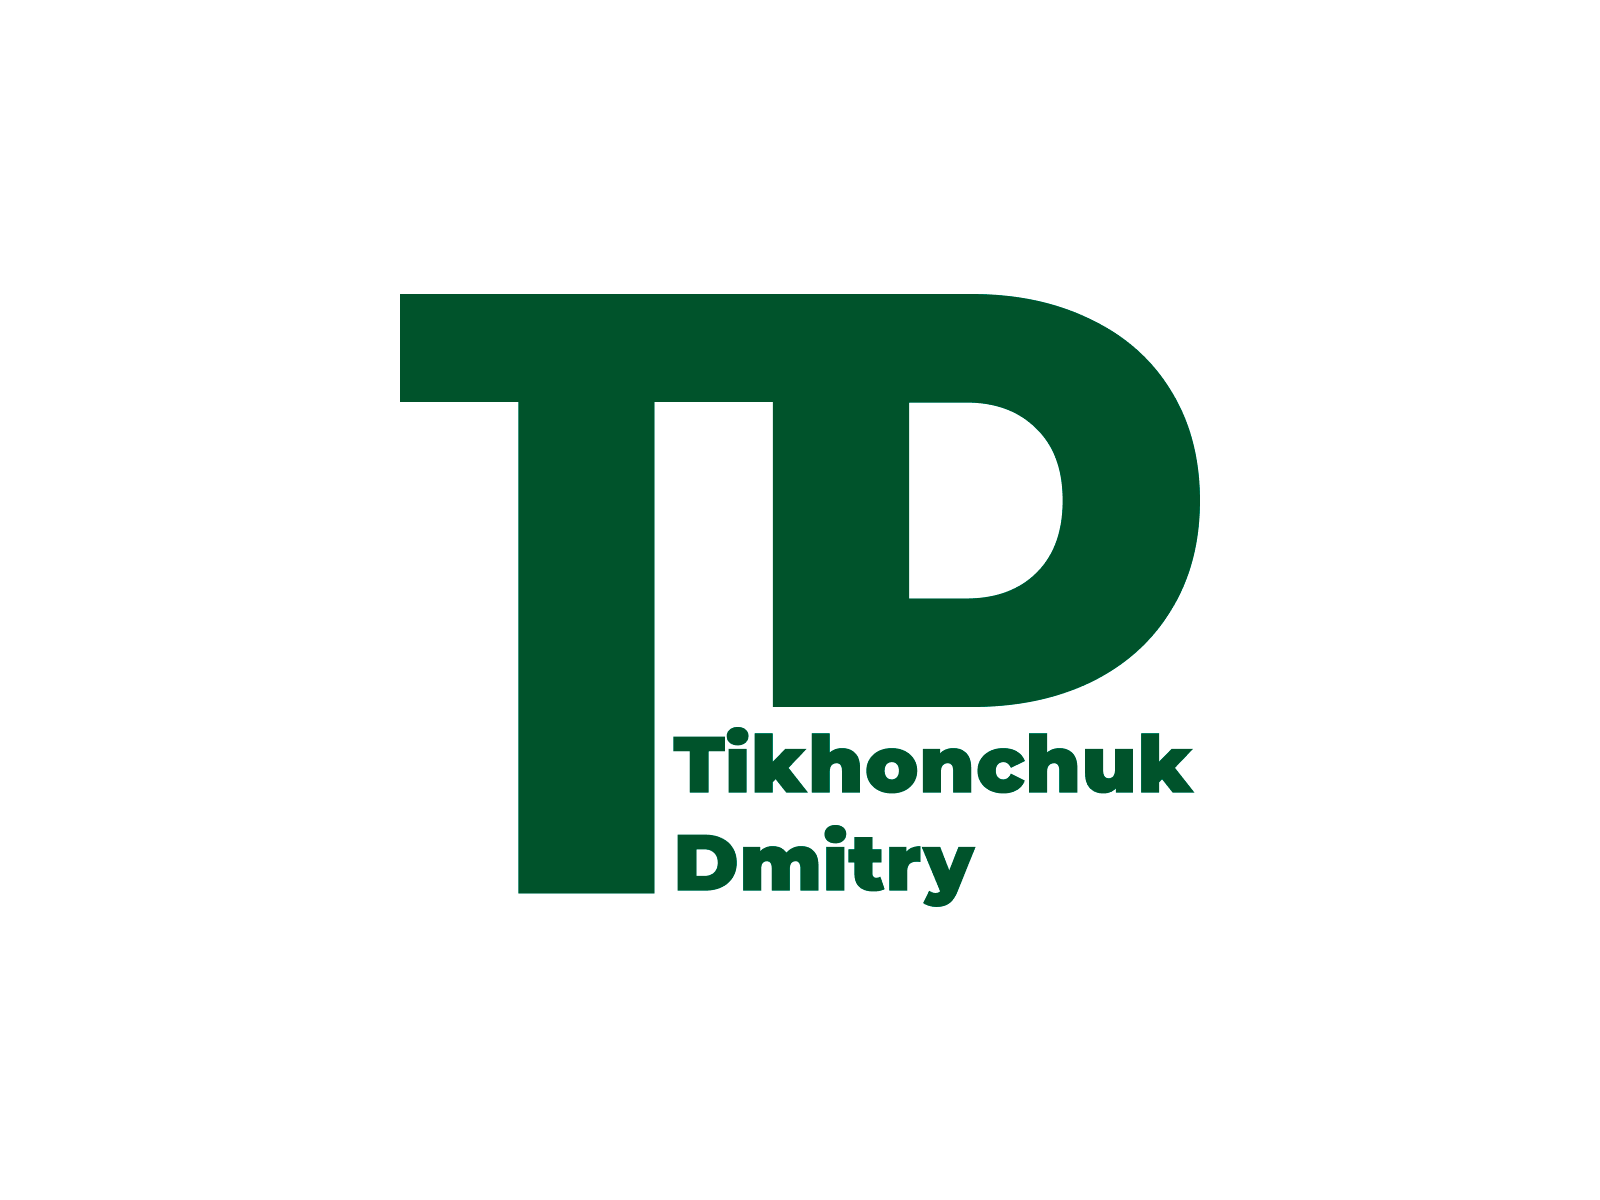 TD Logo Animation